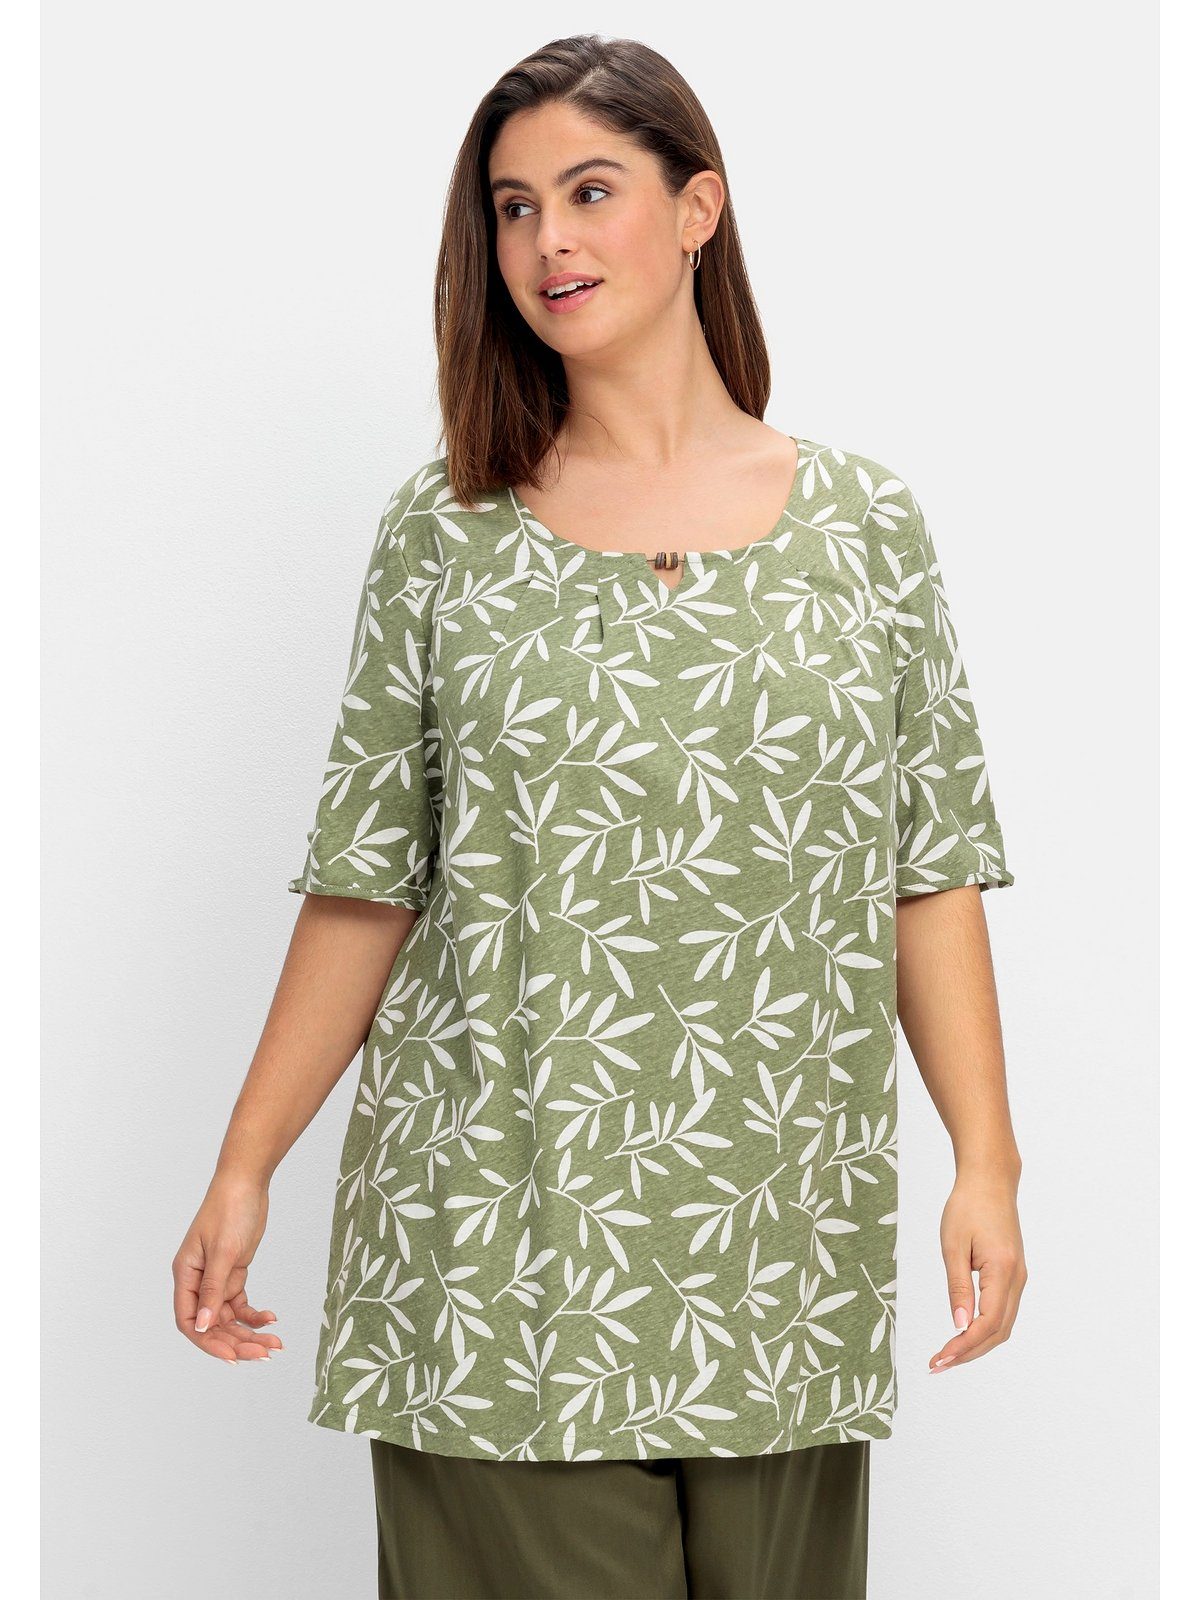 Sheego T-Shirt Große Größen mit Blätterprint, im Leinen-Mix khaki gemustert | T-Shirts